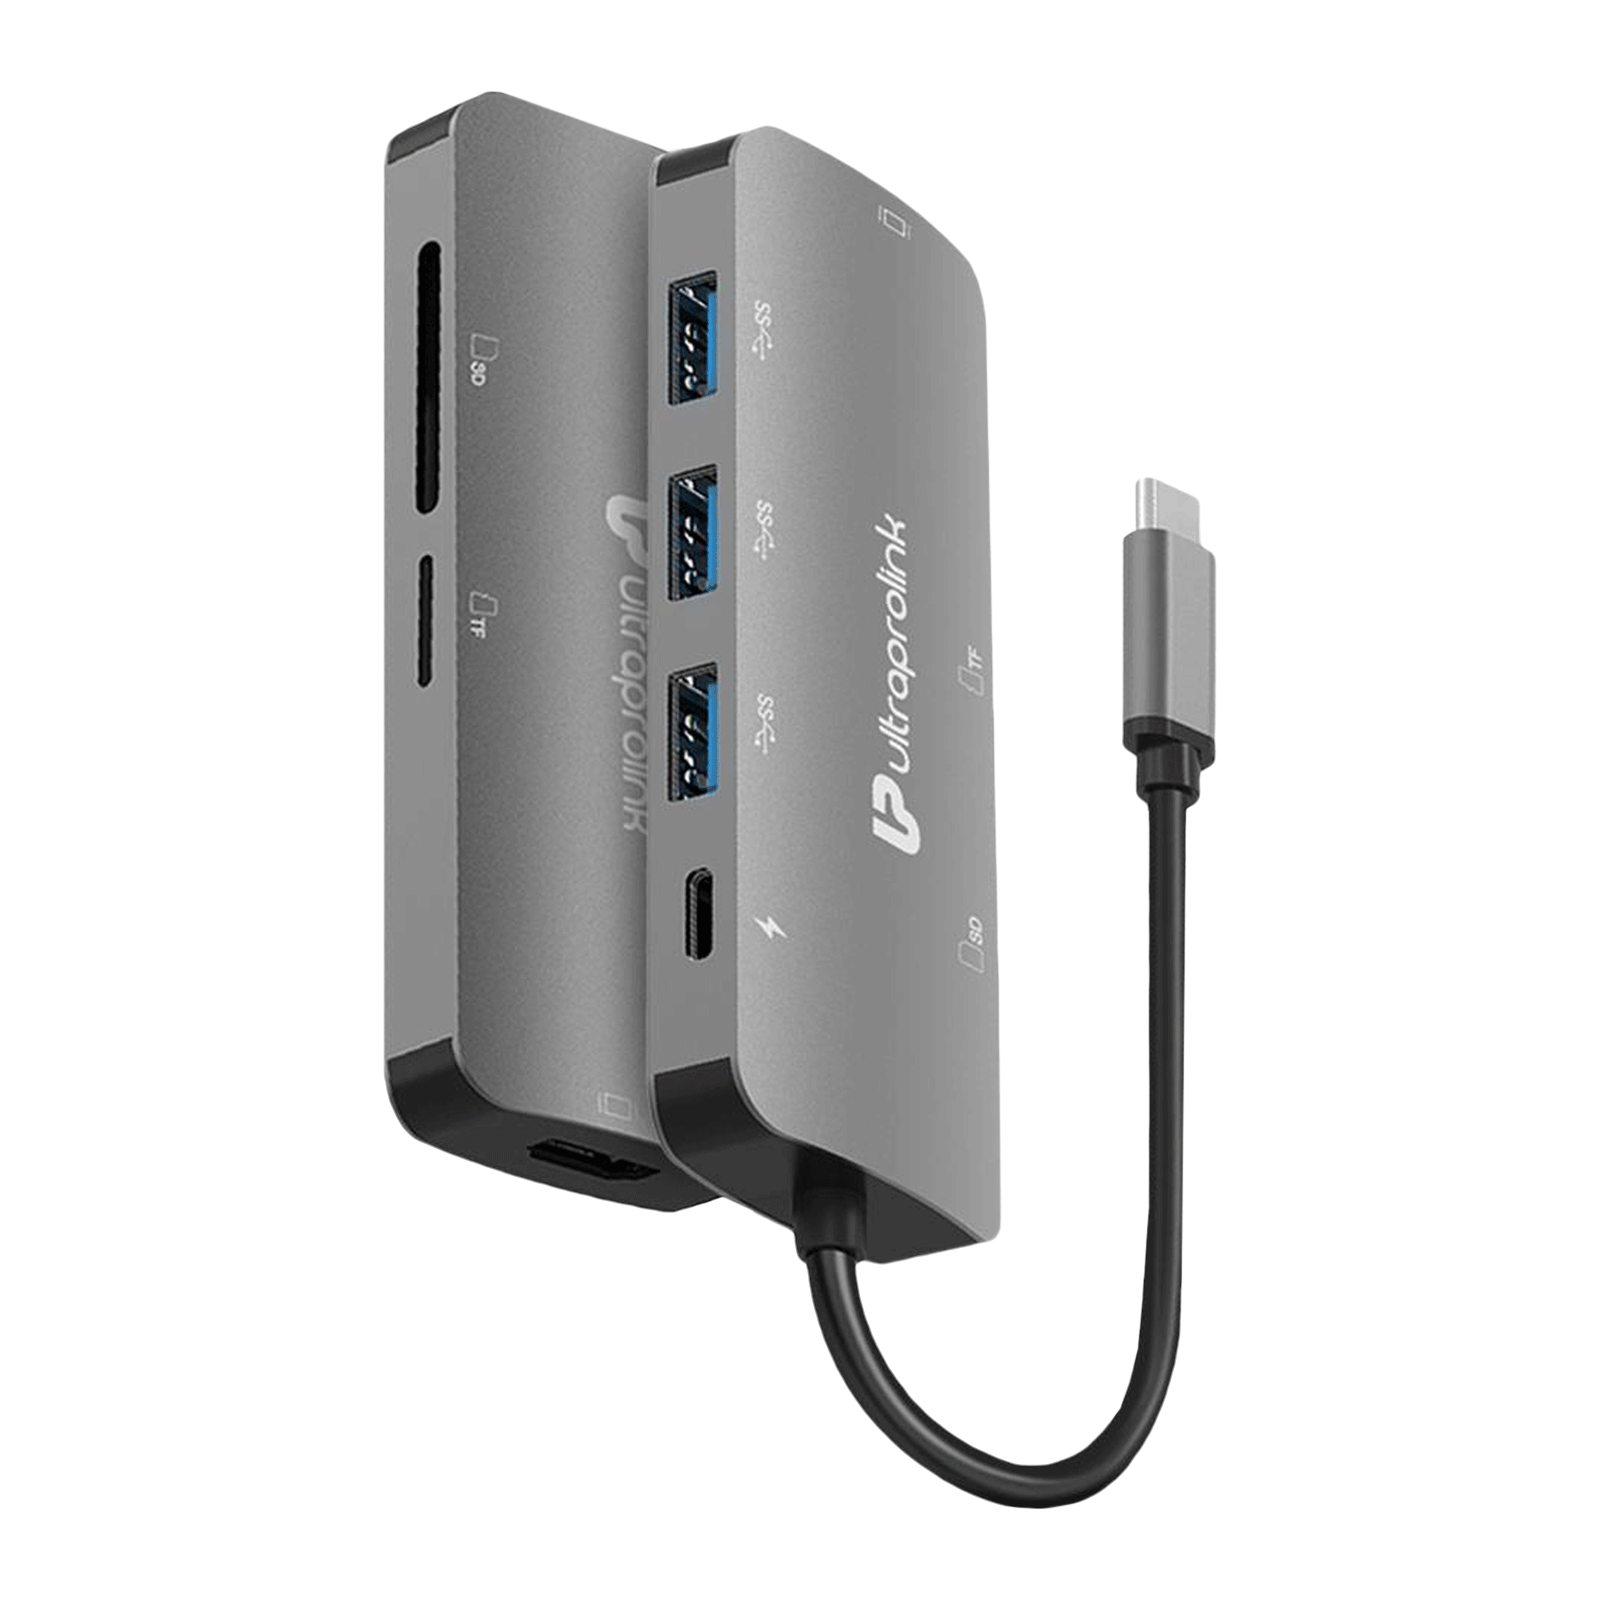 UltraProlink Pro Hub 7-in-1 USB 3.0 Type C to USB 3.0 Type A, SD Card Slot, TF Card Reader, HDMI Type A, USB Type C USB Hub (High Speed Transfer Data, Grey)